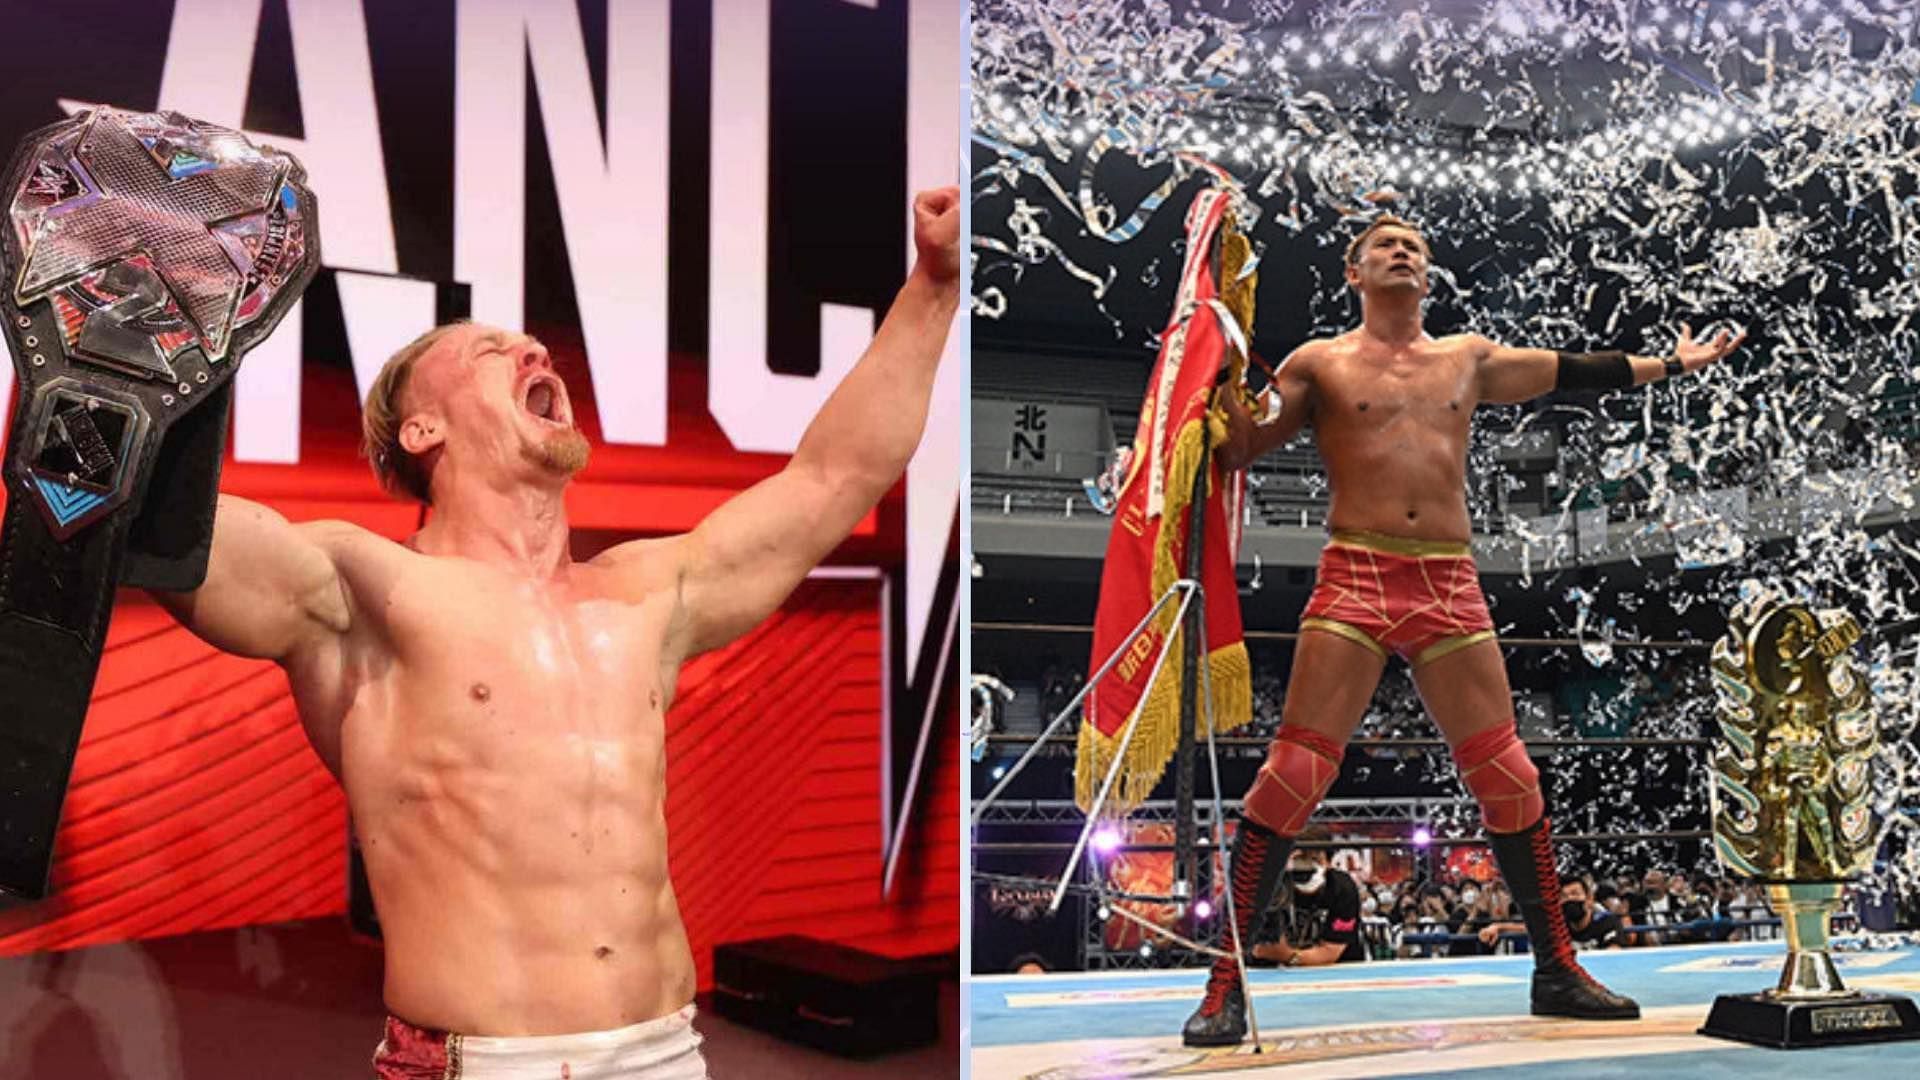 Ilja Dragunov retained his WWE NXT Championship